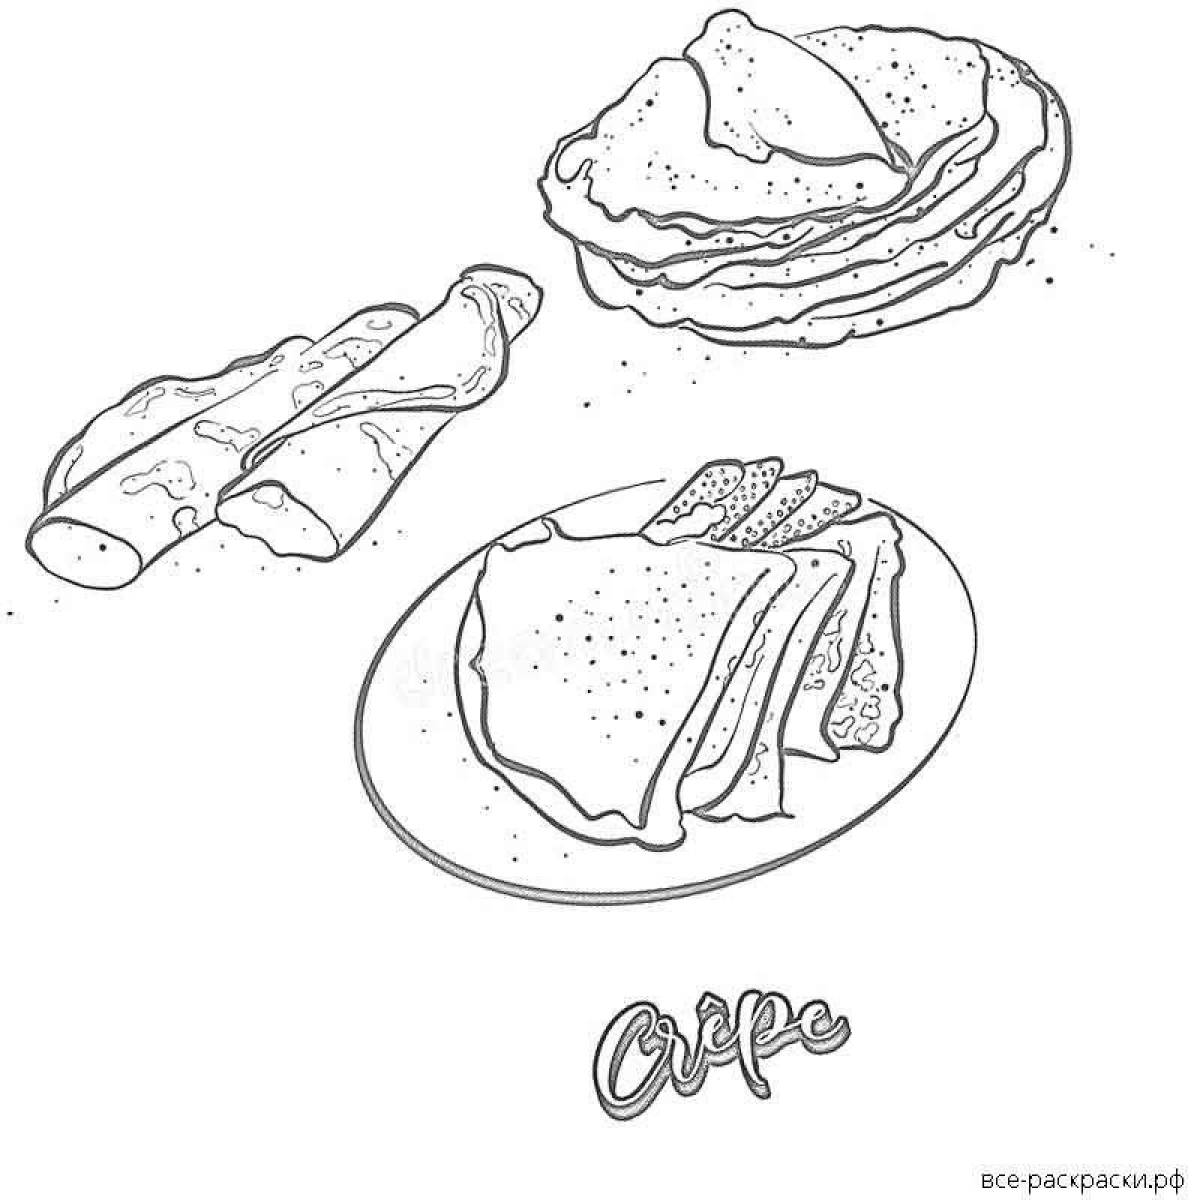 Seductive pancake coloring page